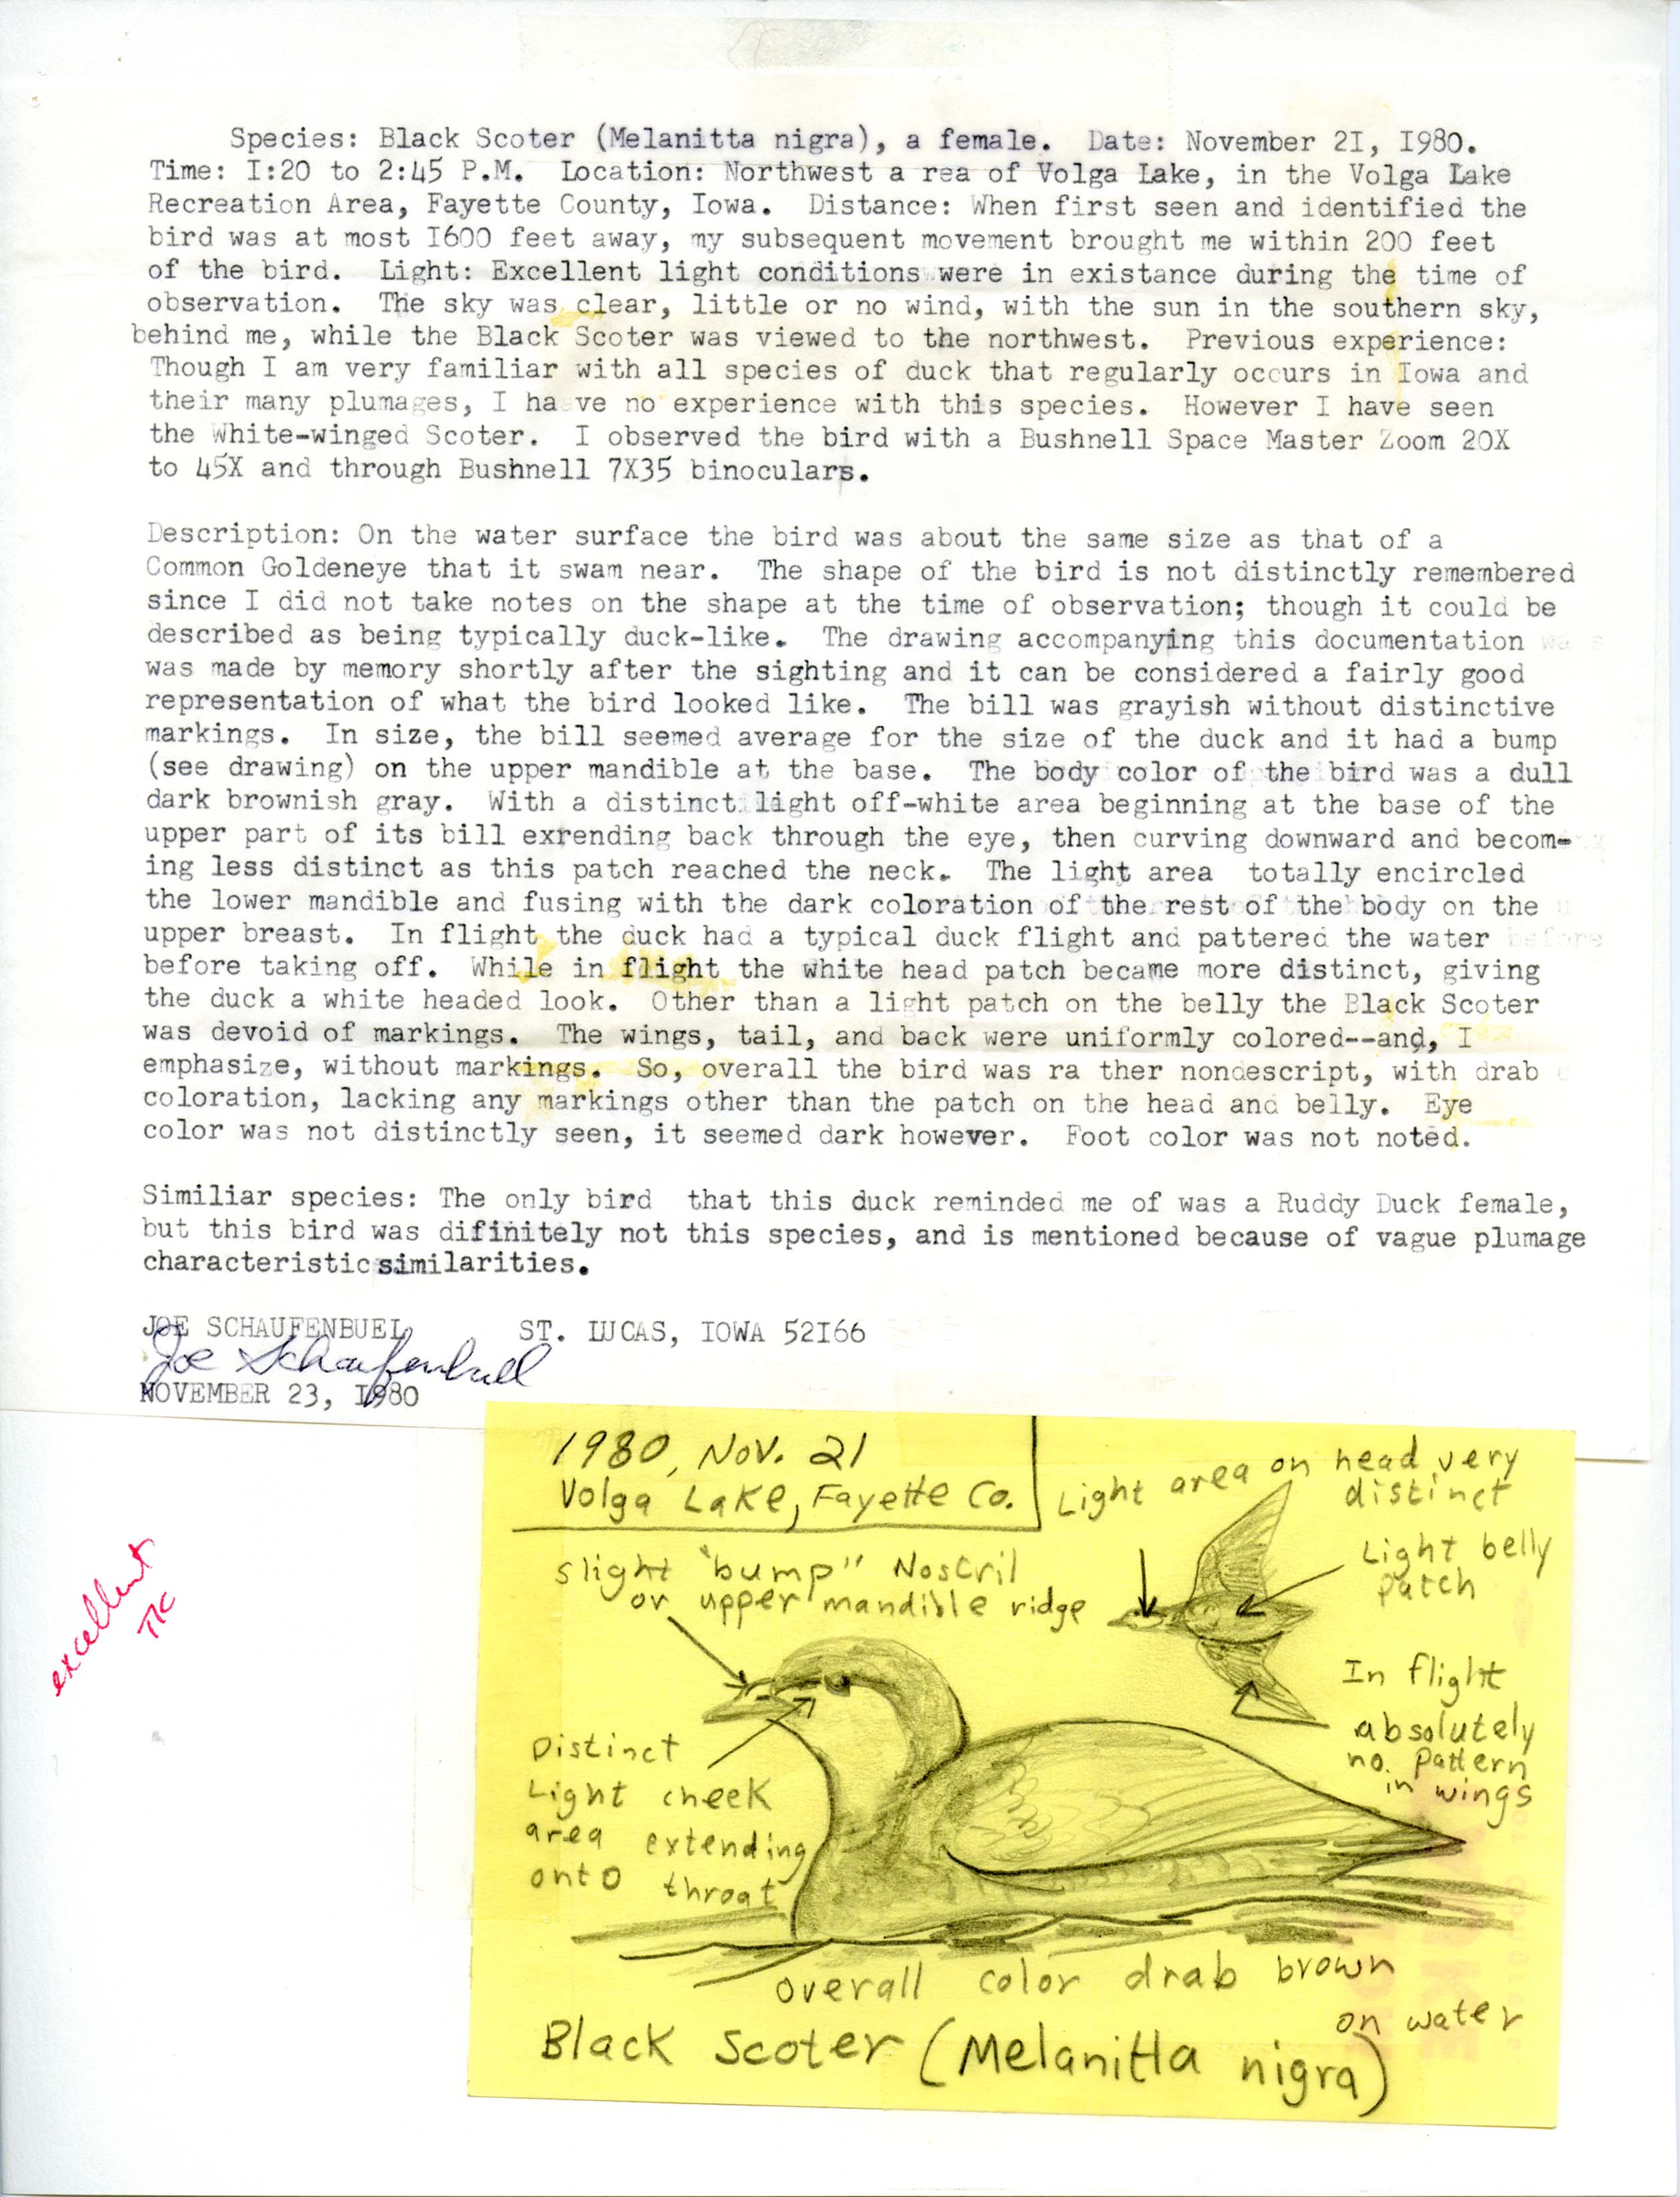 Rare bird documentation form for Black Scoter at Volga Lake, 1980